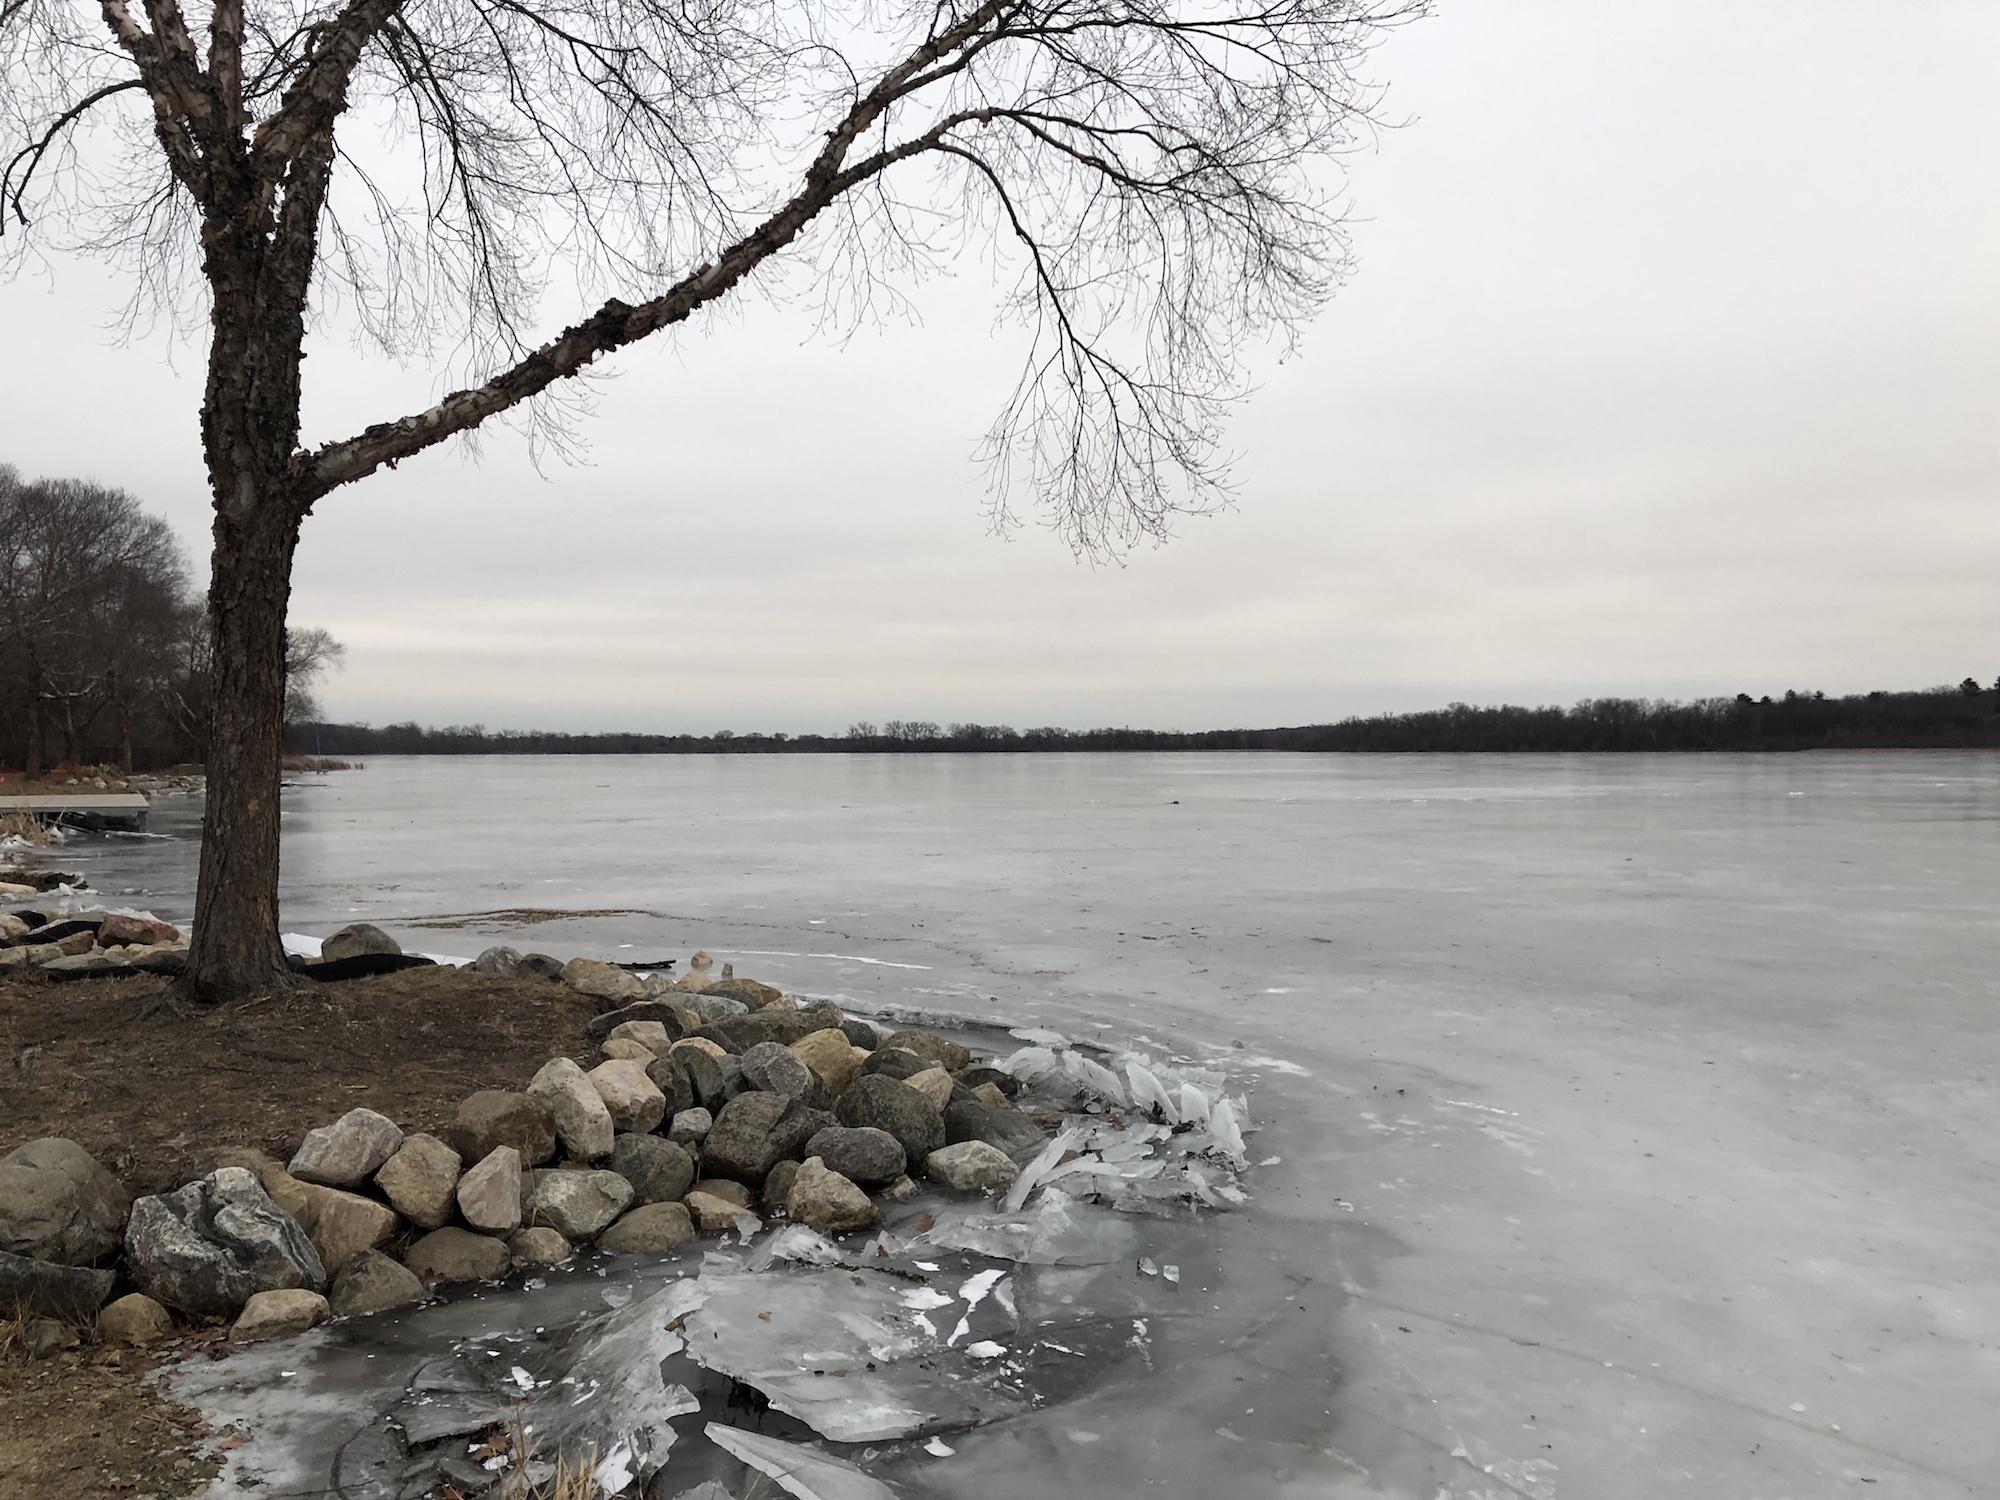 Lake Wingra on January 17, 2019.